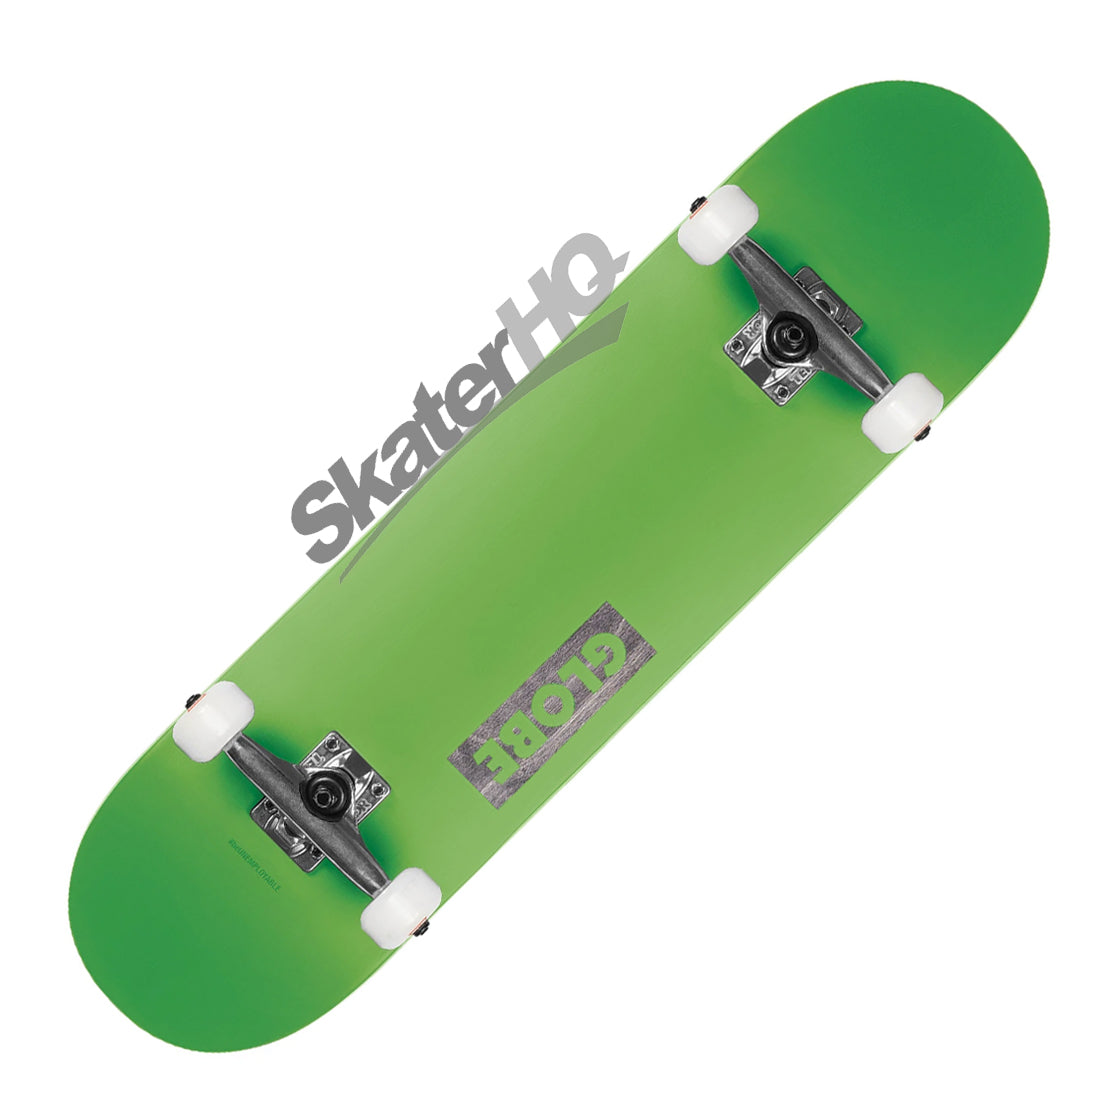 Globe Goodstock 8.0 Complete - Neon Green Skateboard Completes Modern Street